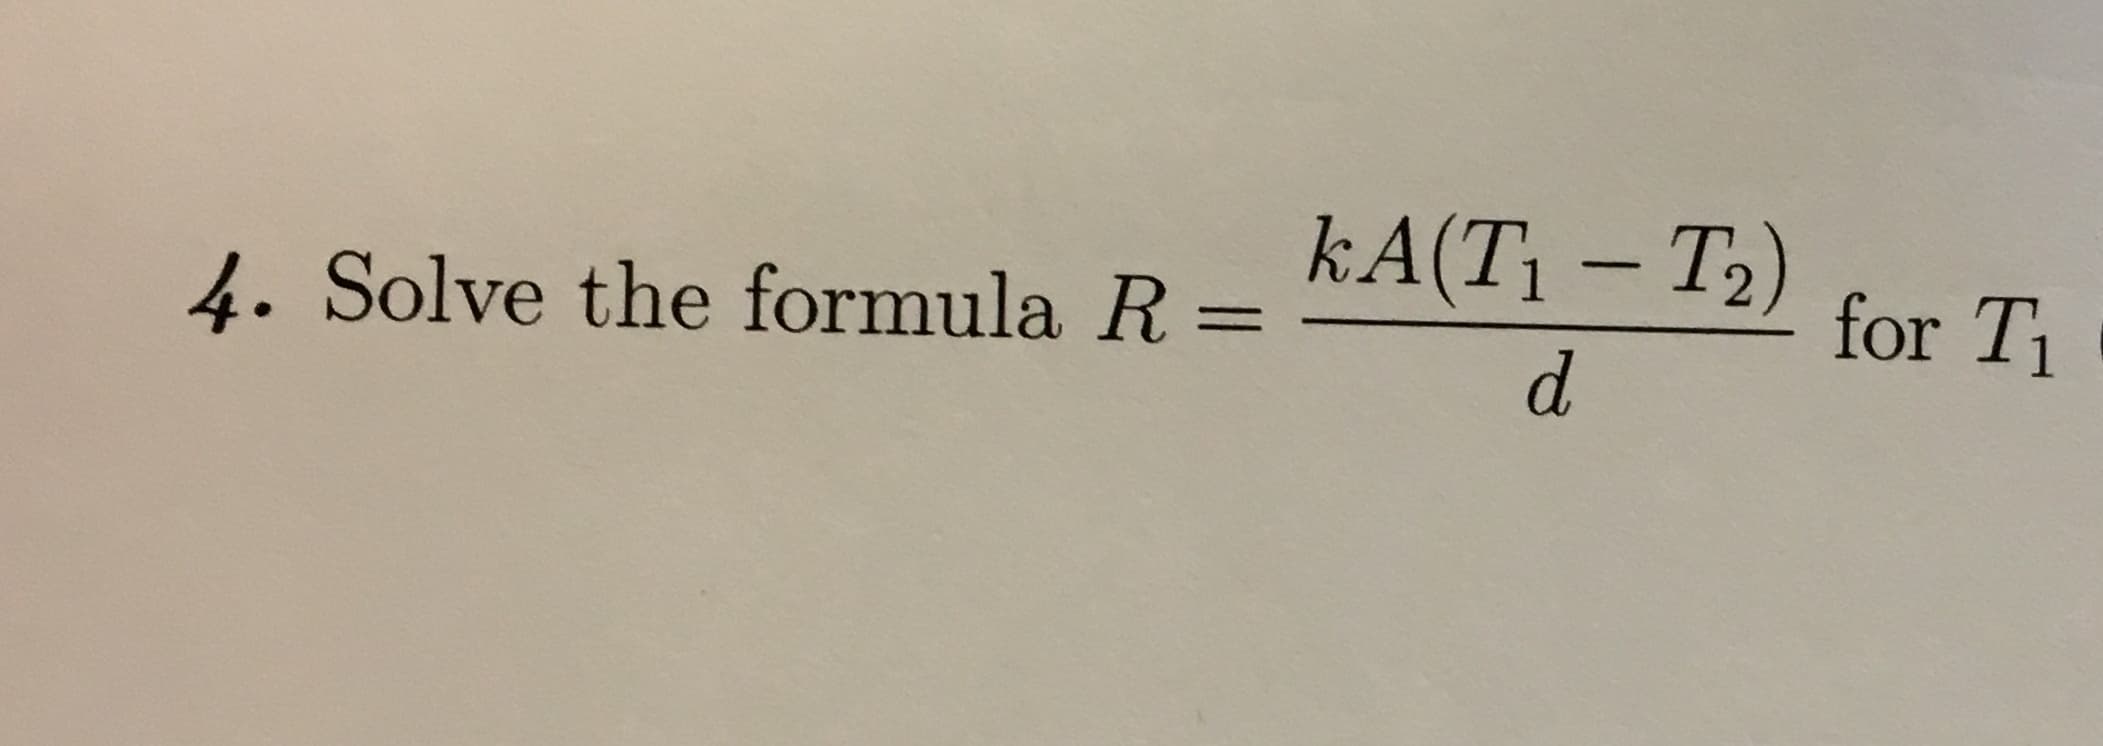 kA (Ti-B)
for Ti
Solve the formula R-
